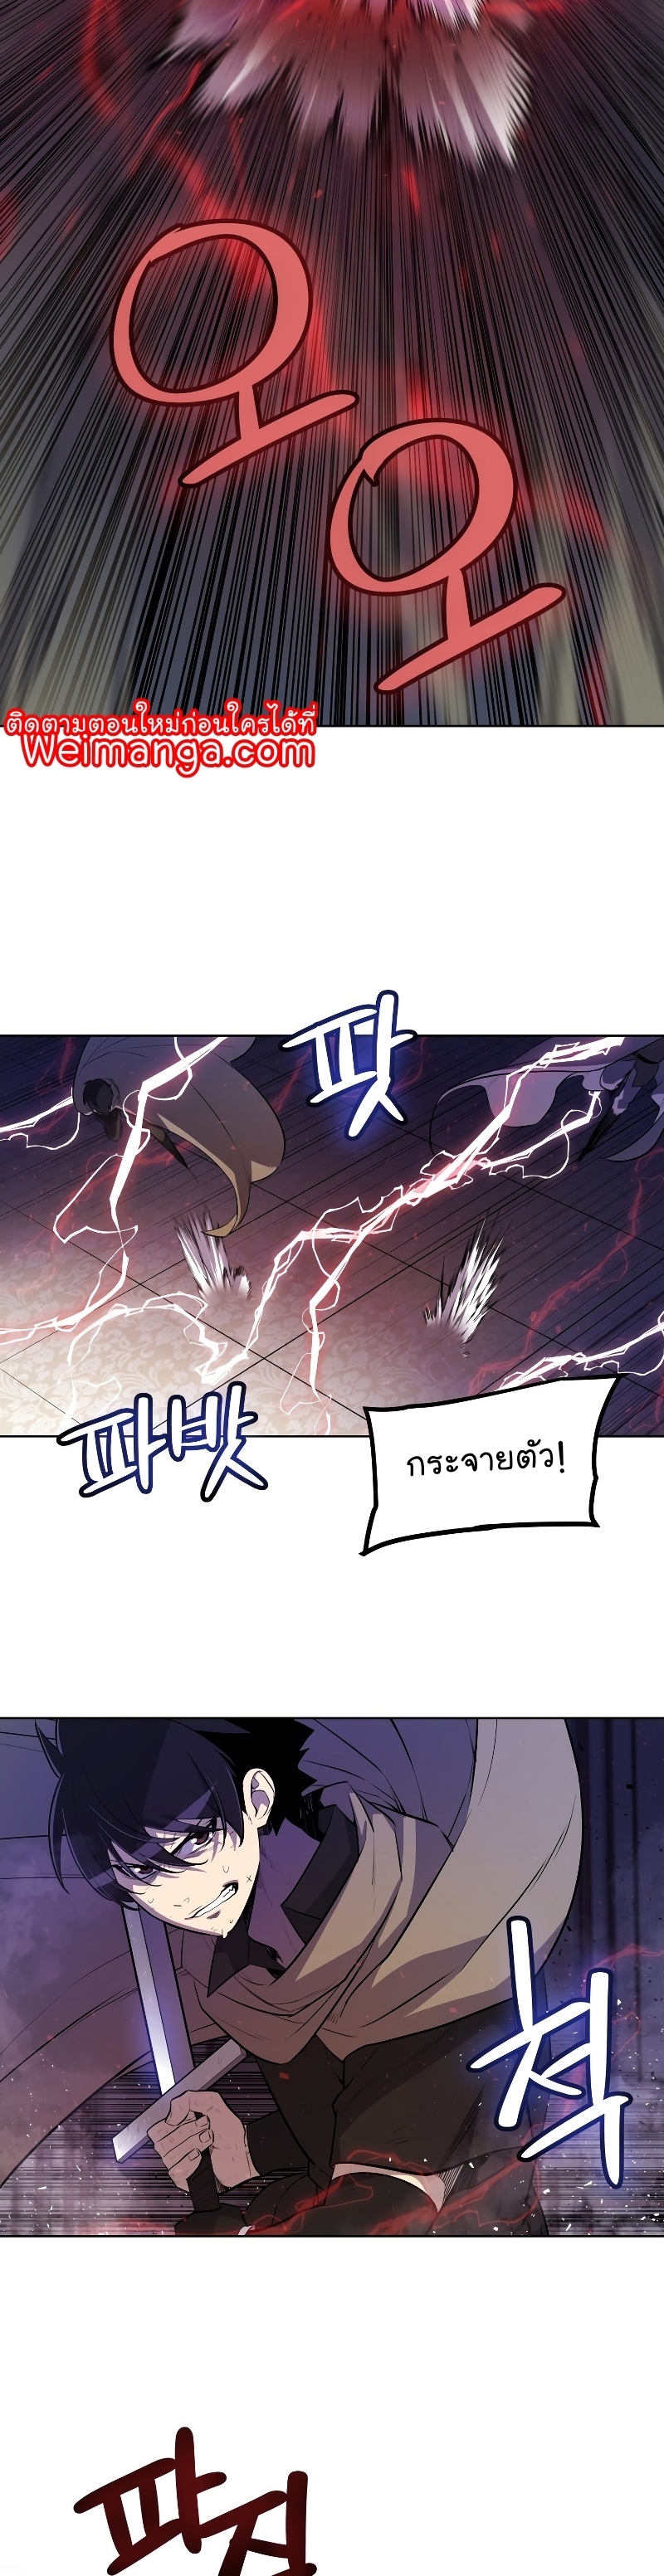 Overpower Sword Manga Wei 74 (28)